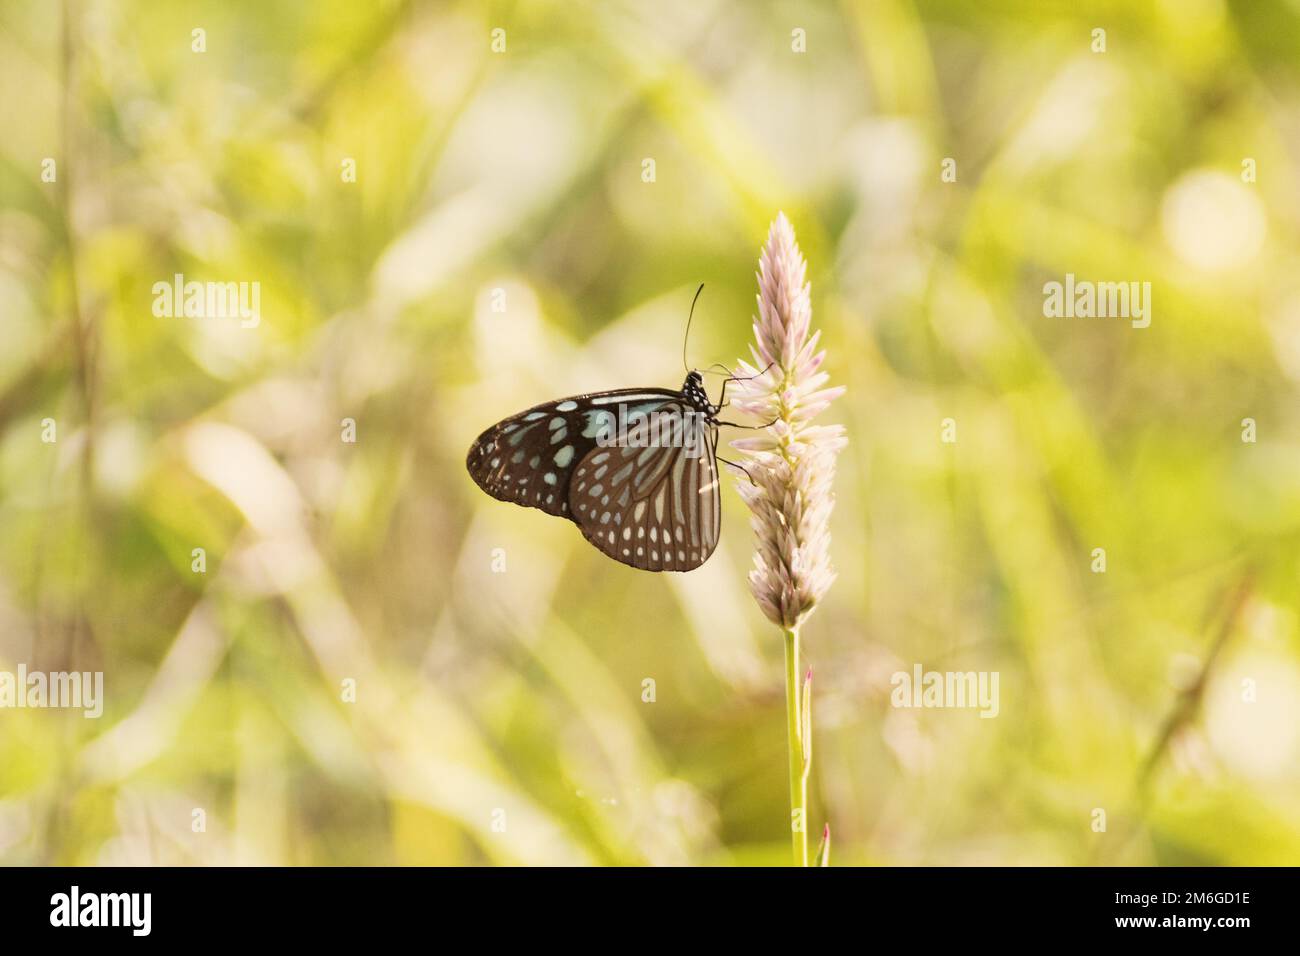 Butterflies from the genus Milkweed Stock Photo